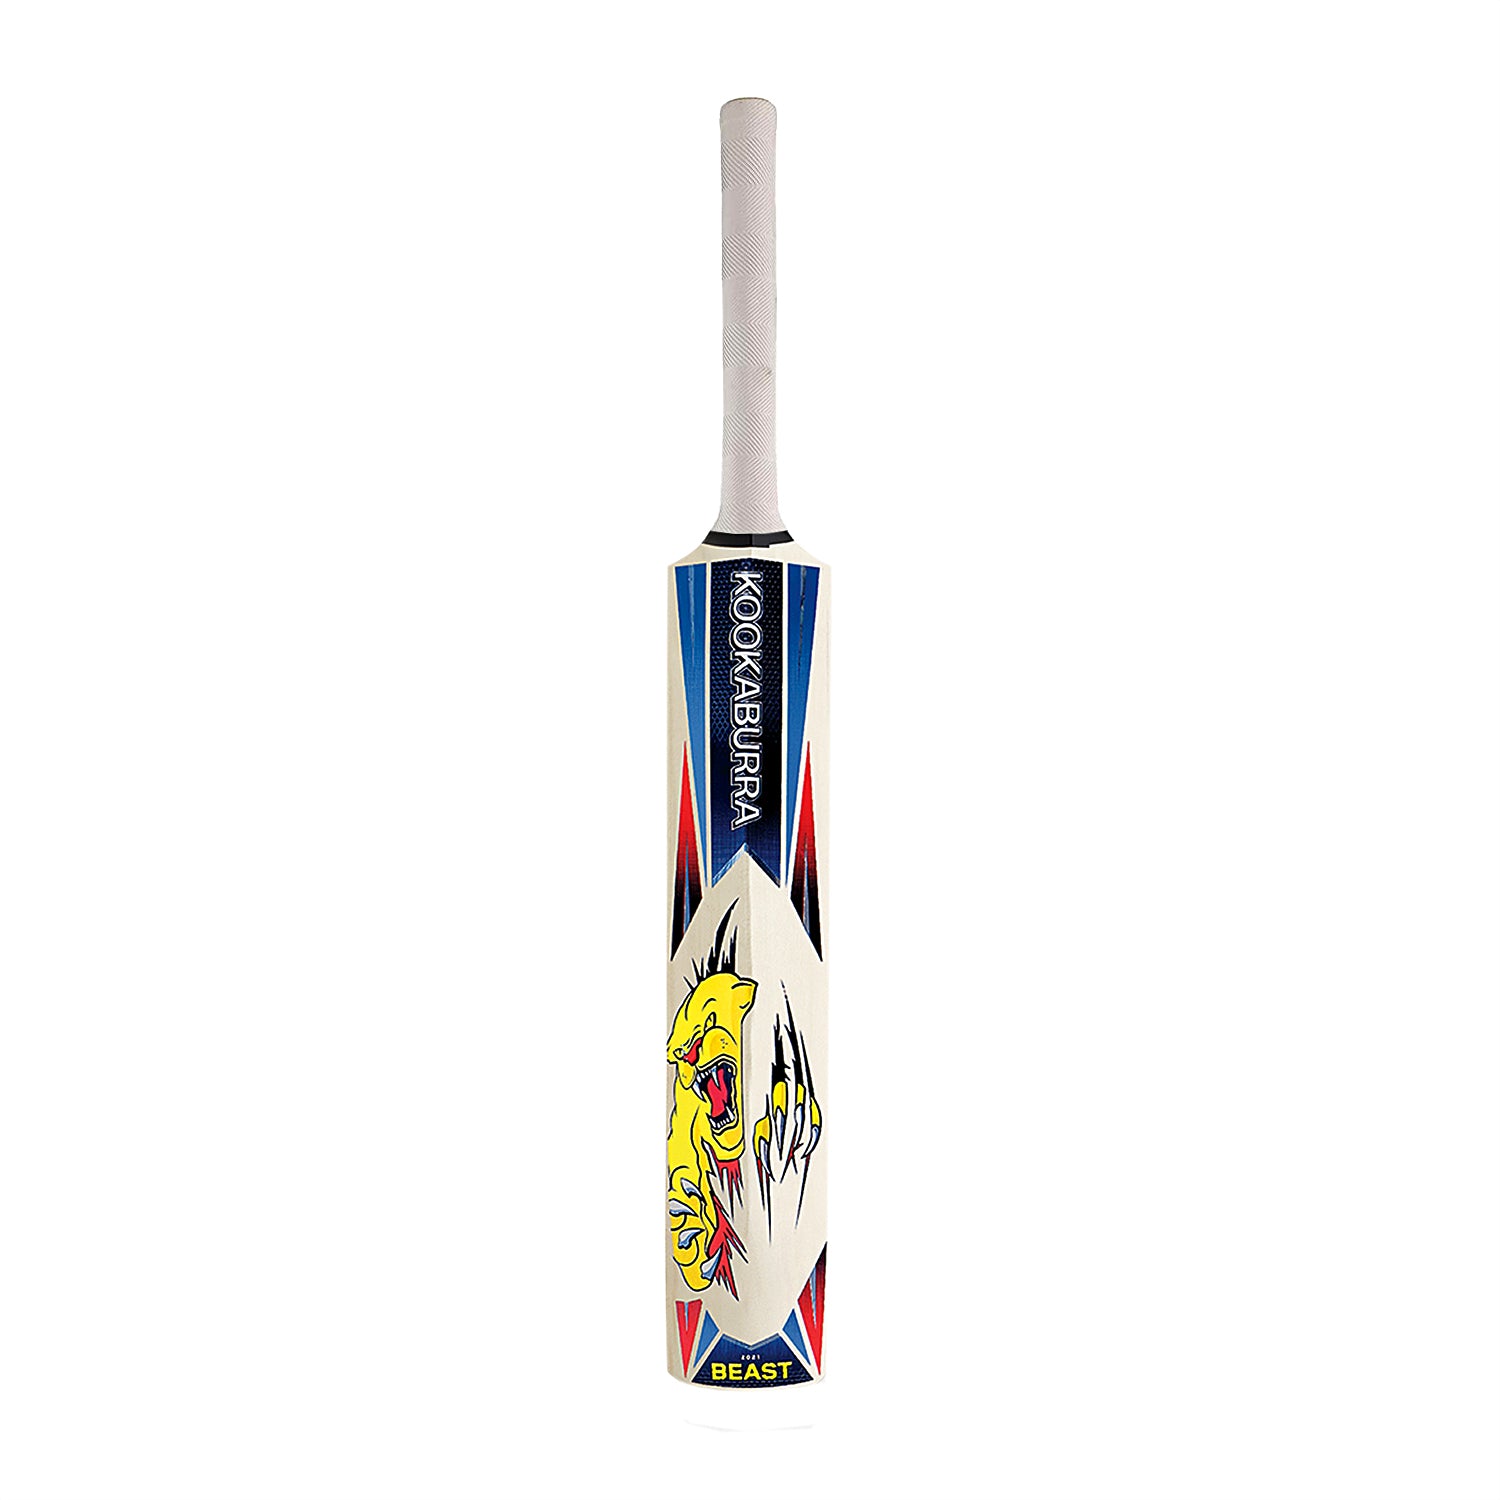 Kookaburra Beast Master Kashmir Willow Cricket Bat - Best Price online Prokicksports.com